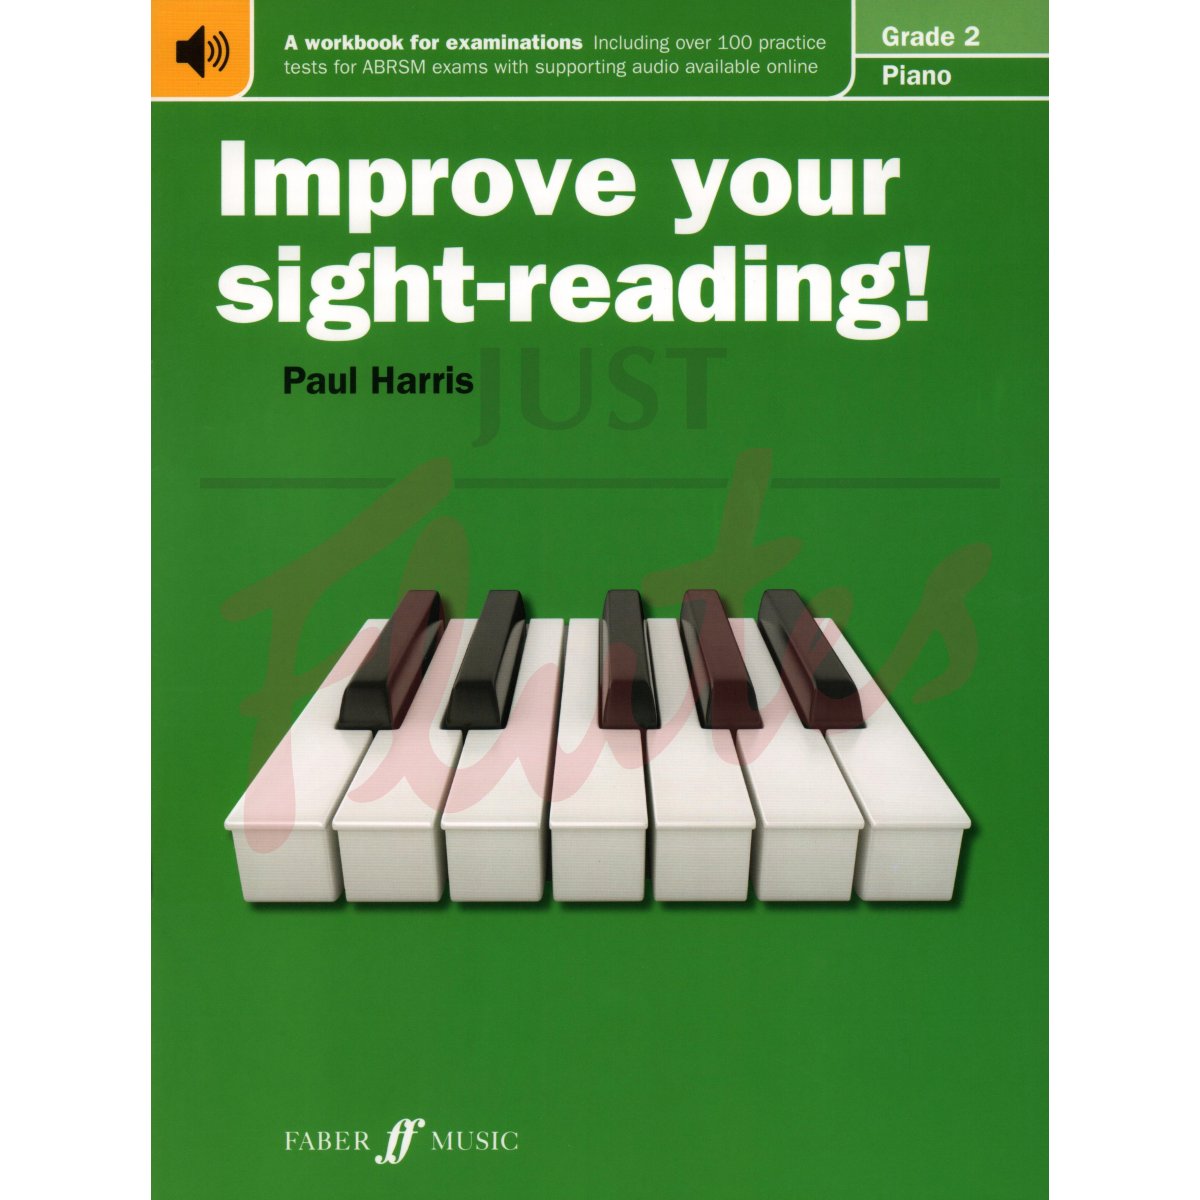 Improve Your Sight-Reading! [Piano] Grade 2